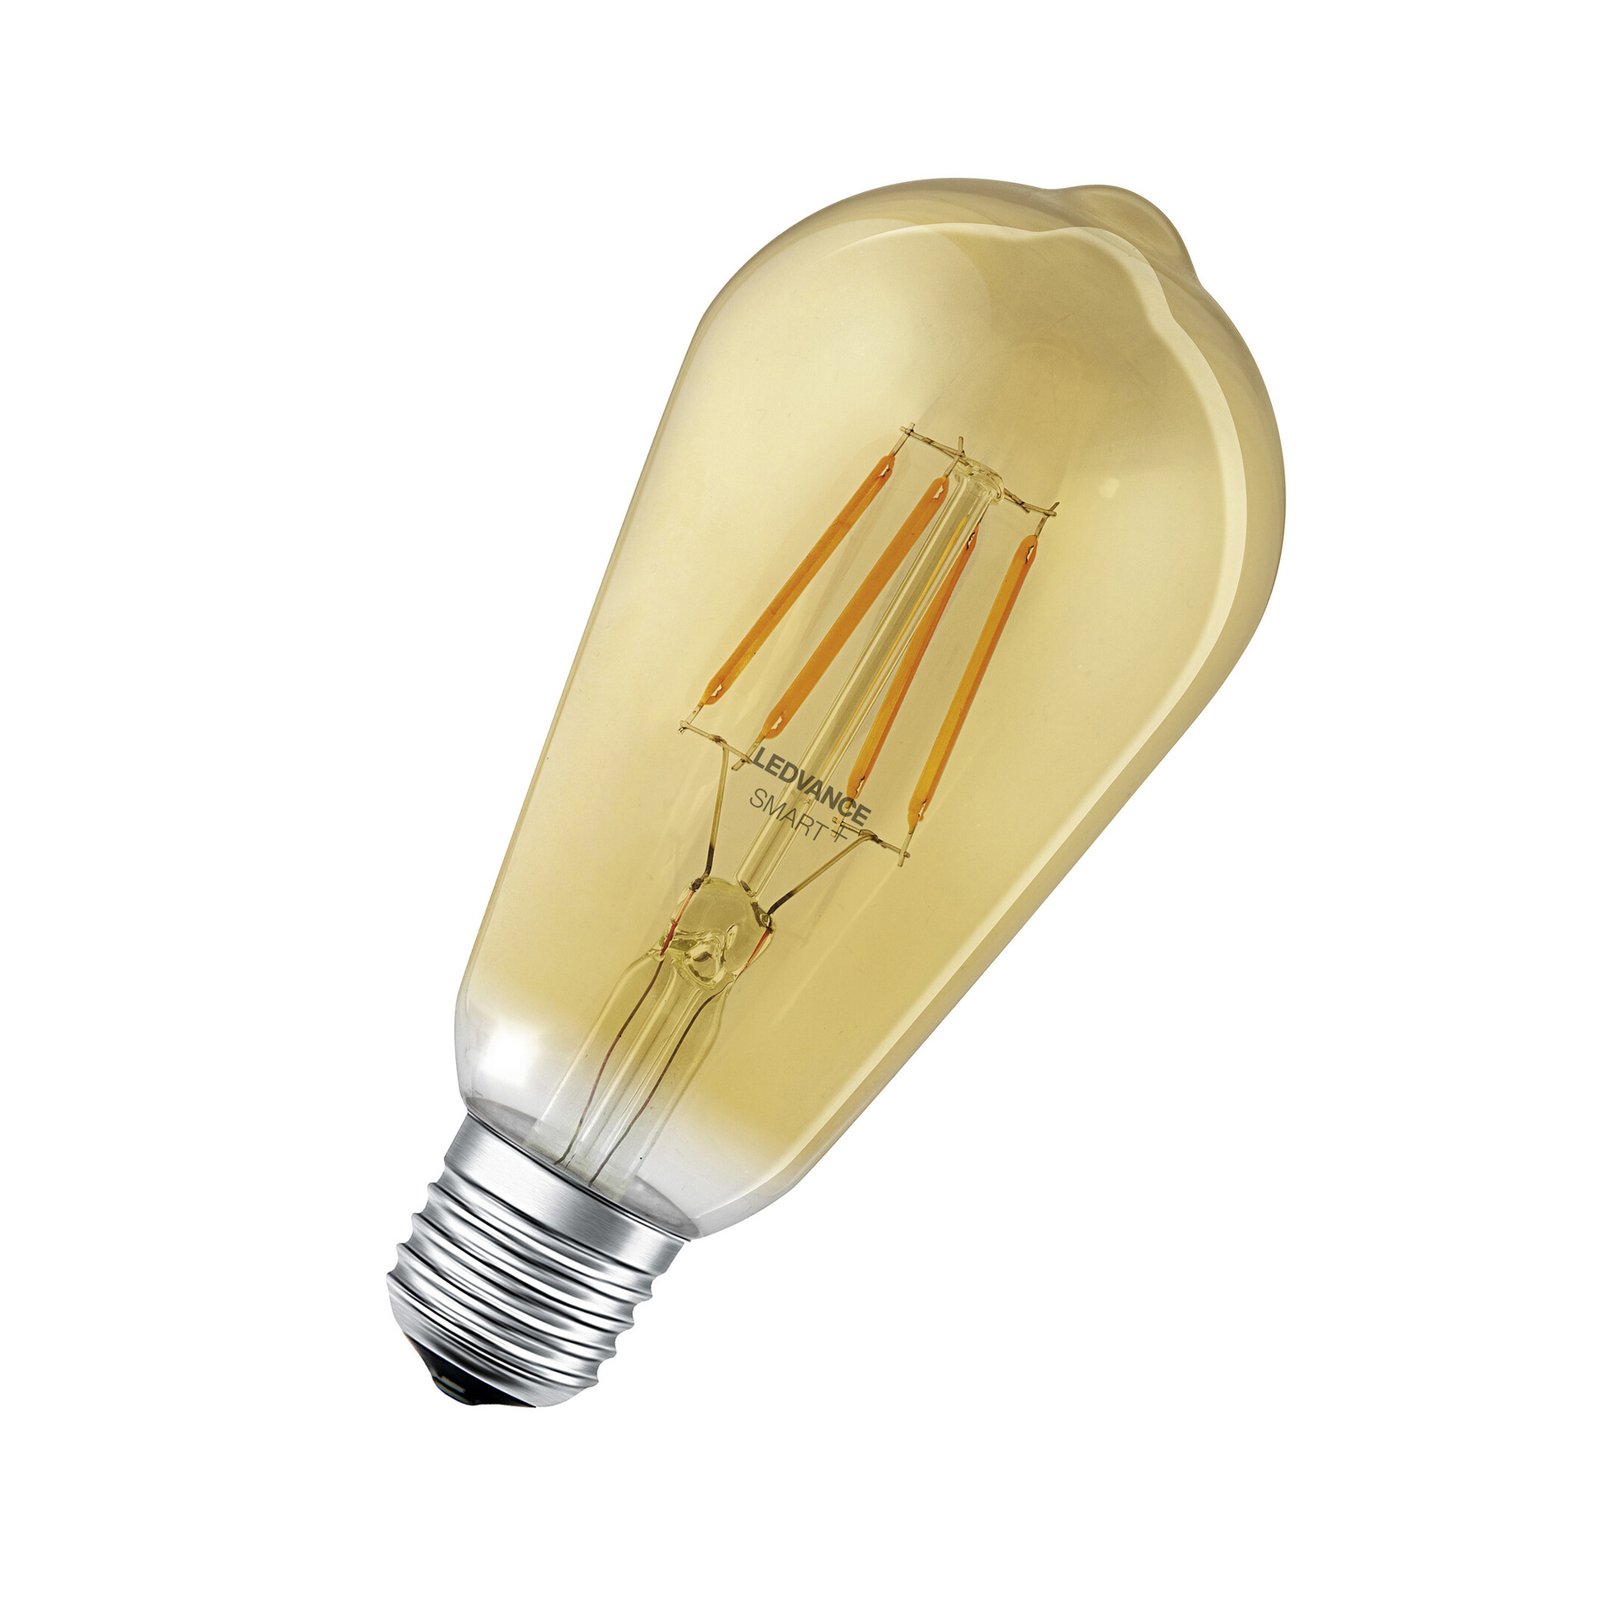 LEDVANCE SMART+ WiFi E27 6W Edison zlatá 2 400 K